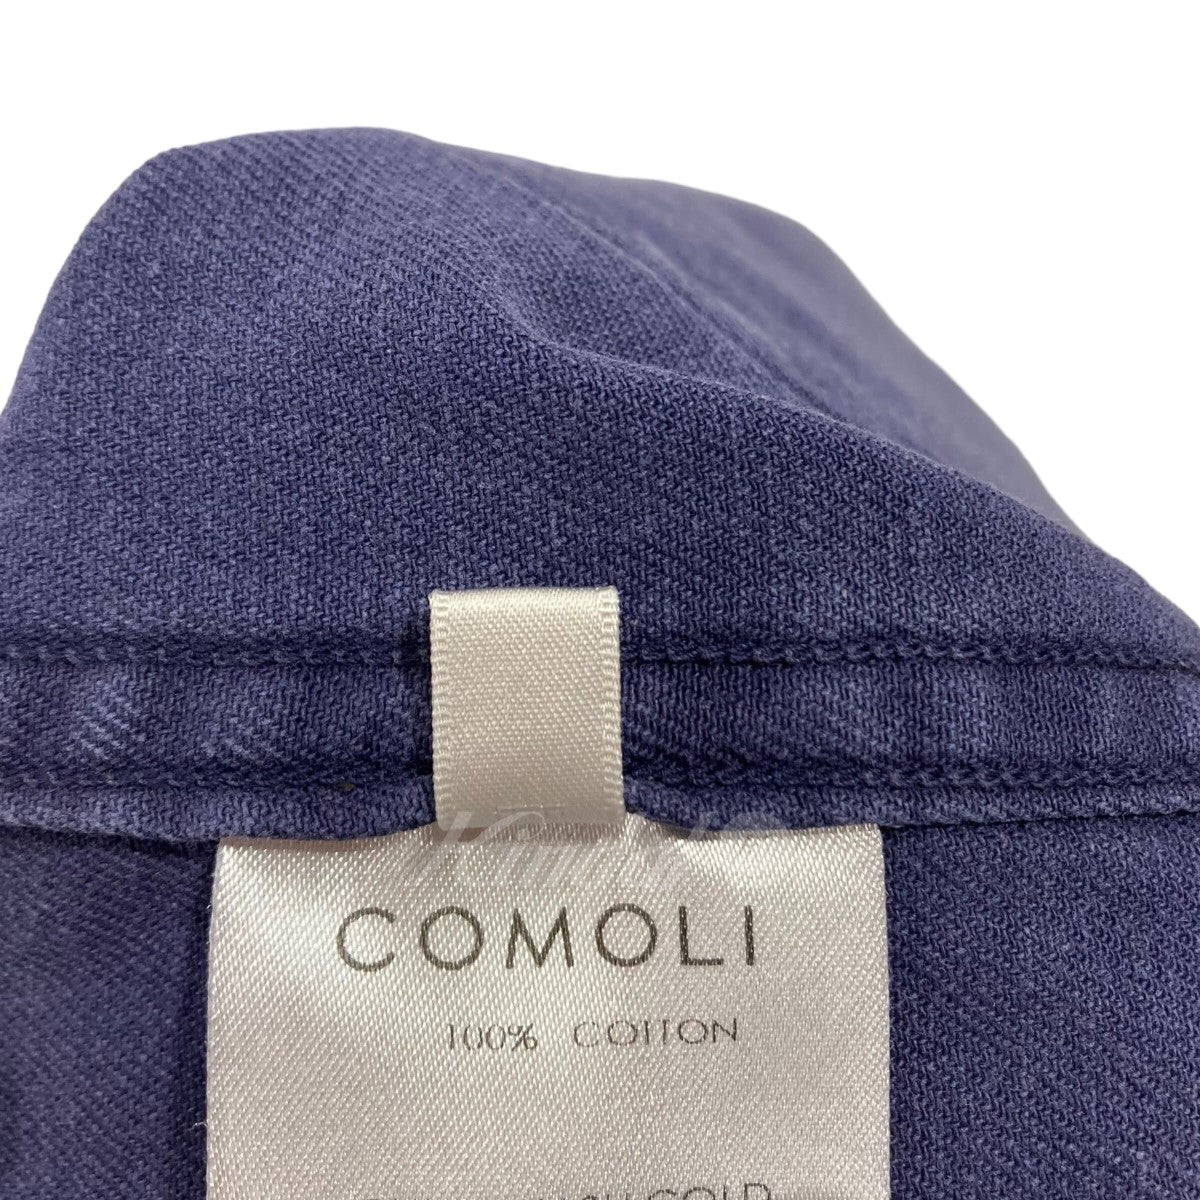 COMOLI(コモリ) コットンドリルワークジャケット X01-01016 ネイビー ...